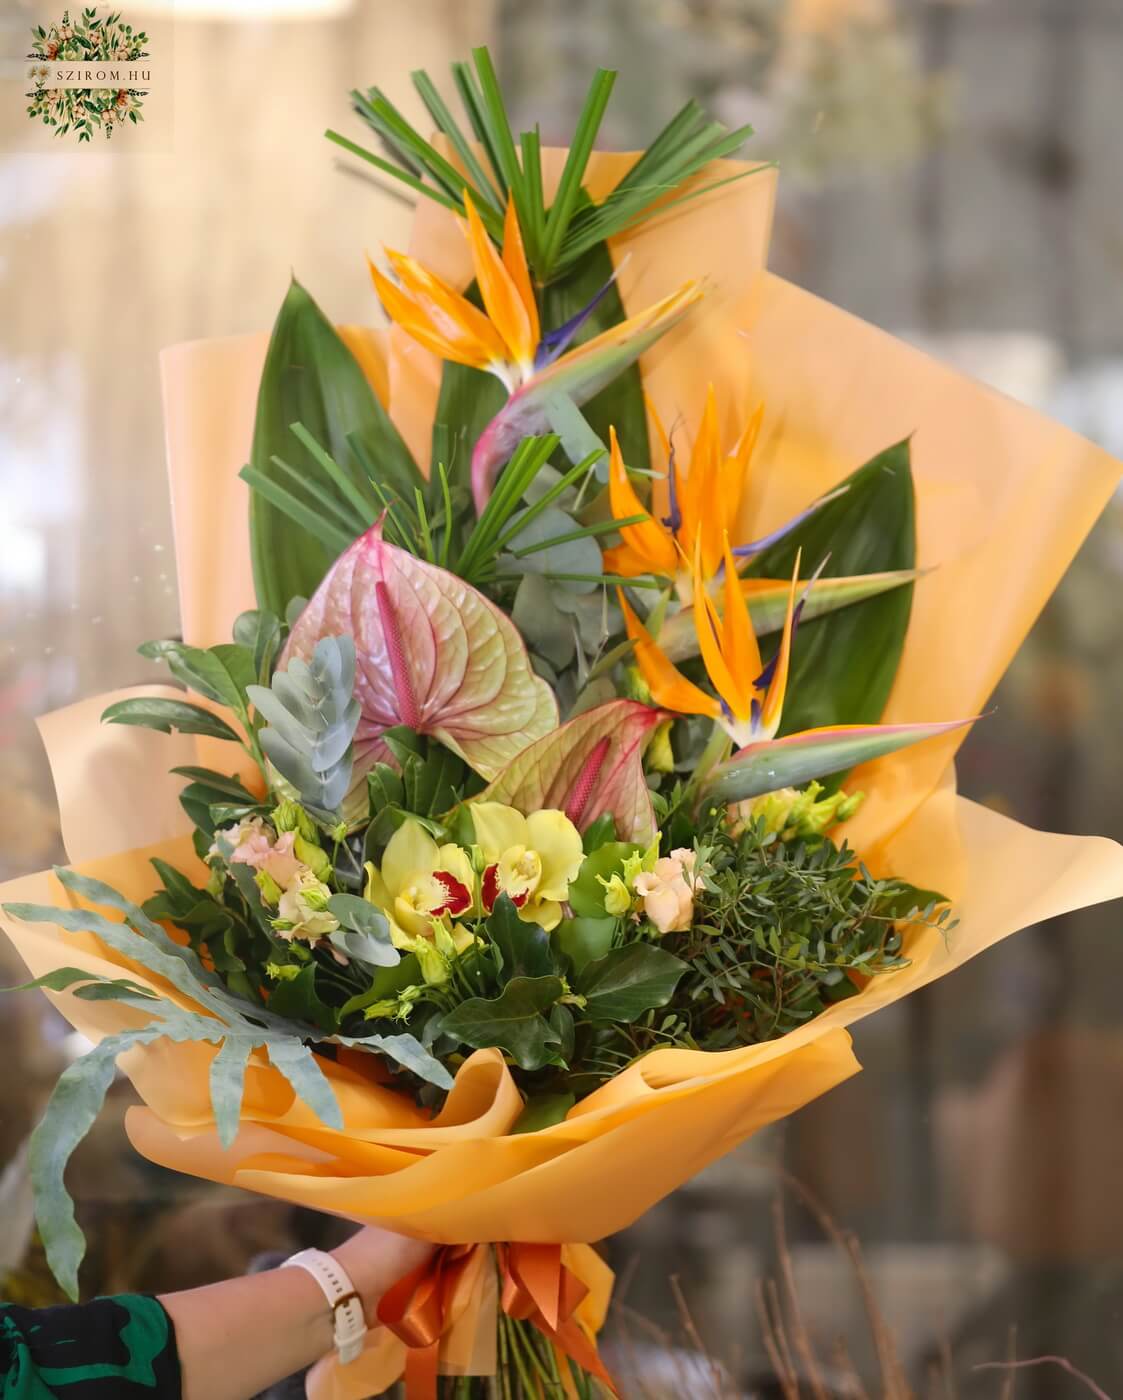 flower delivery Budapest - Tropical bouquet with strelizias, anthuriums, eustomas